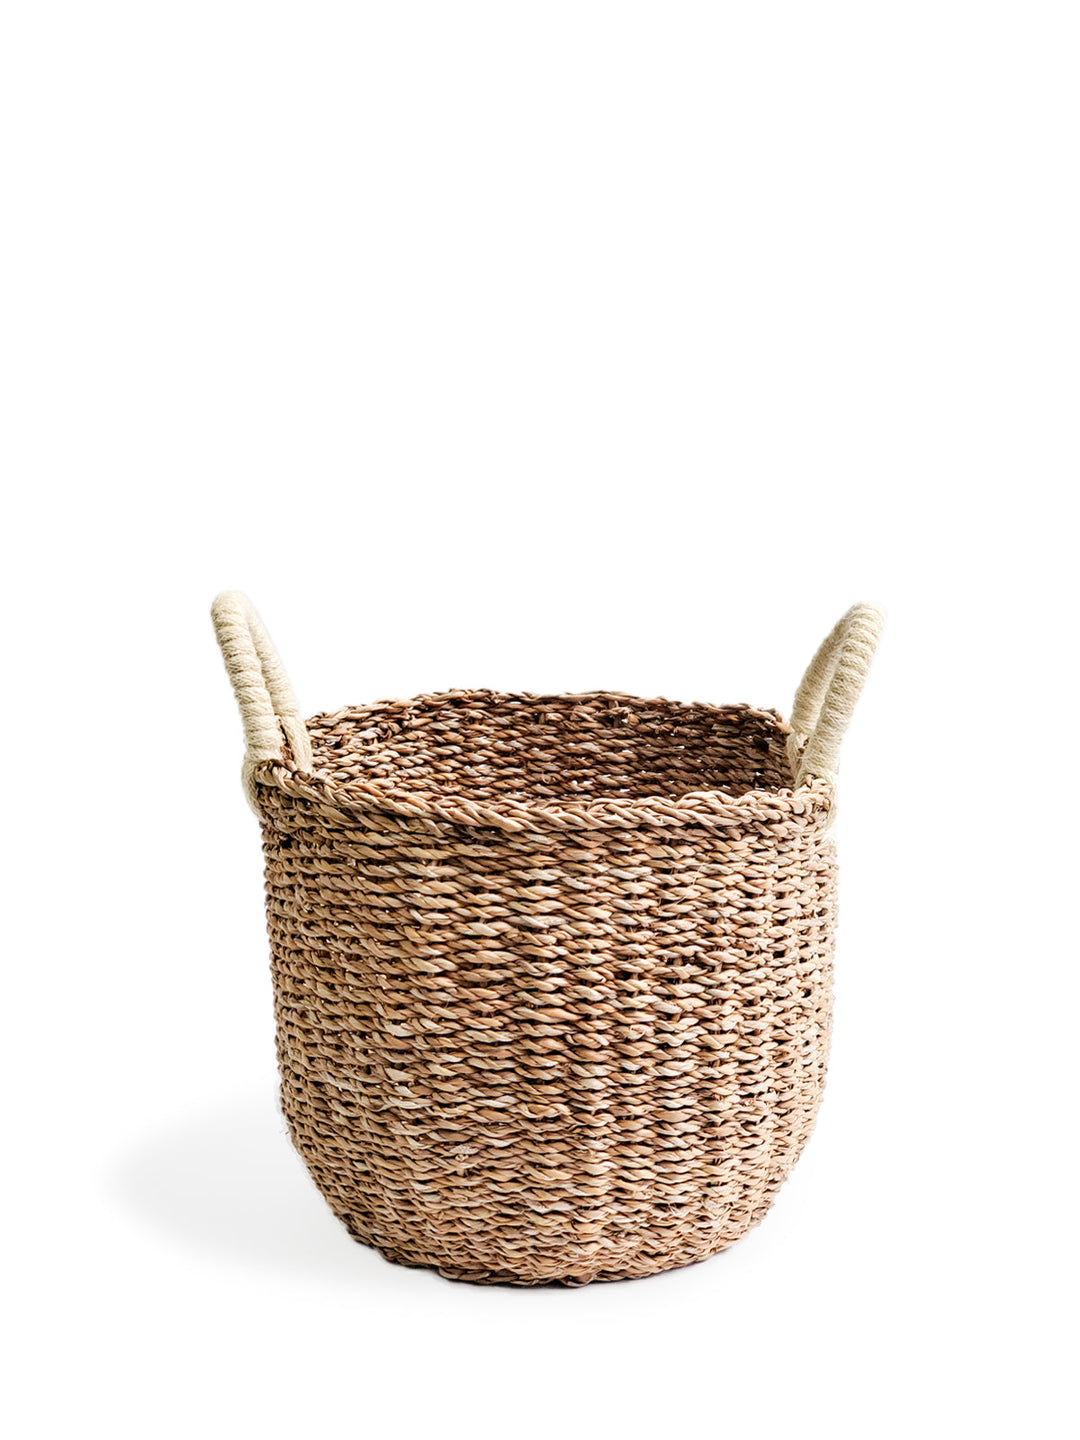 Savar Basket Seagrass with White Jute Handle Eco Friendly Storage-7